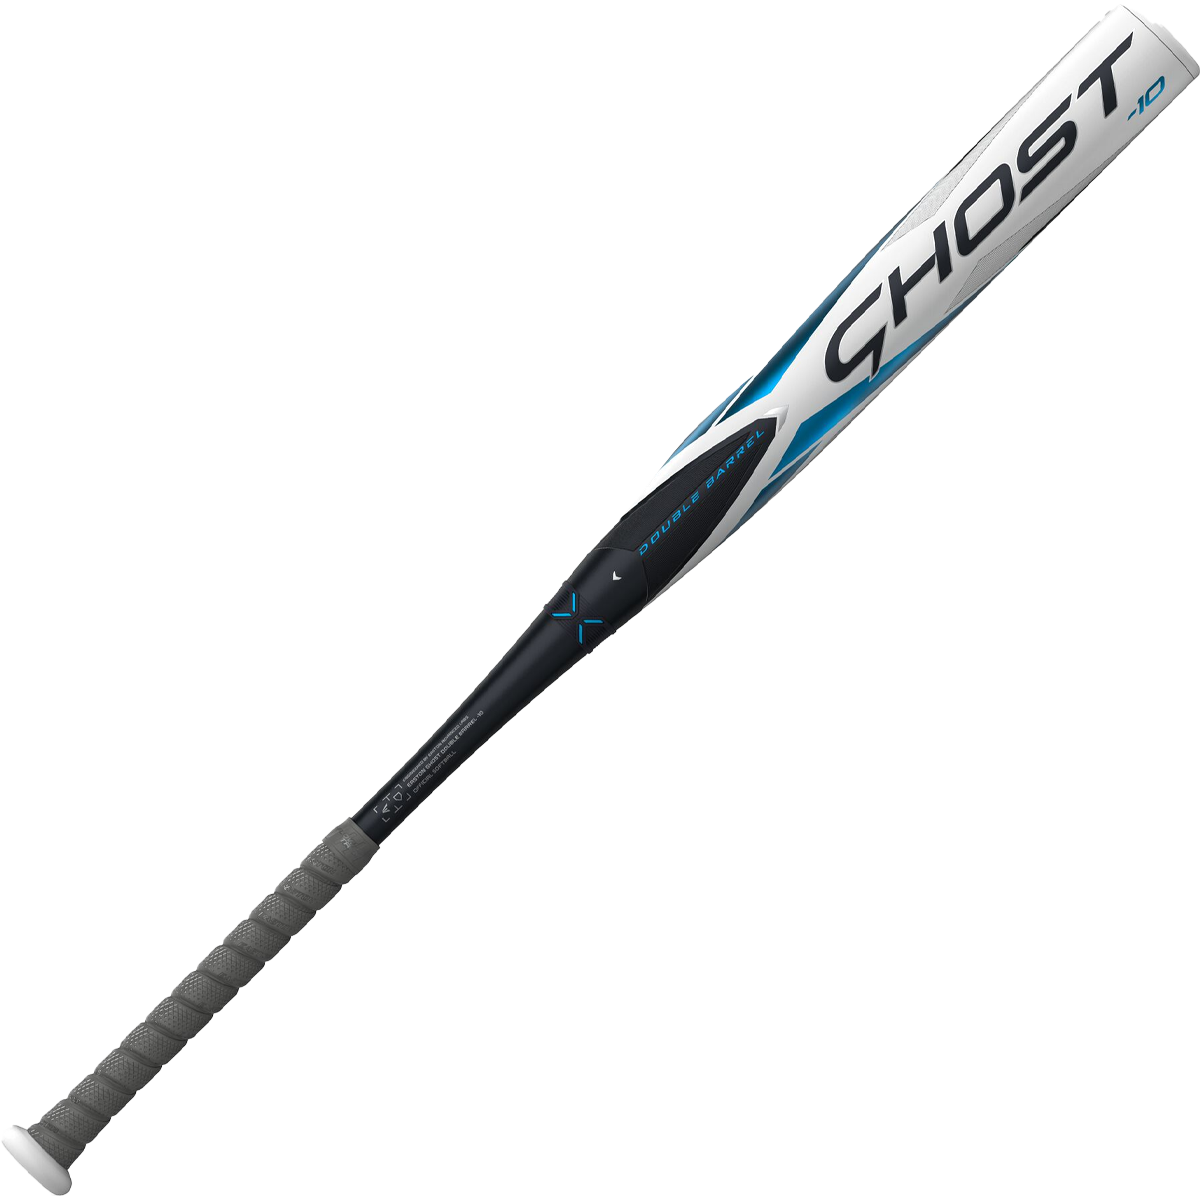 Easton Ghost Advanced Softball Bat - White (FP20GHAD10) for sale online